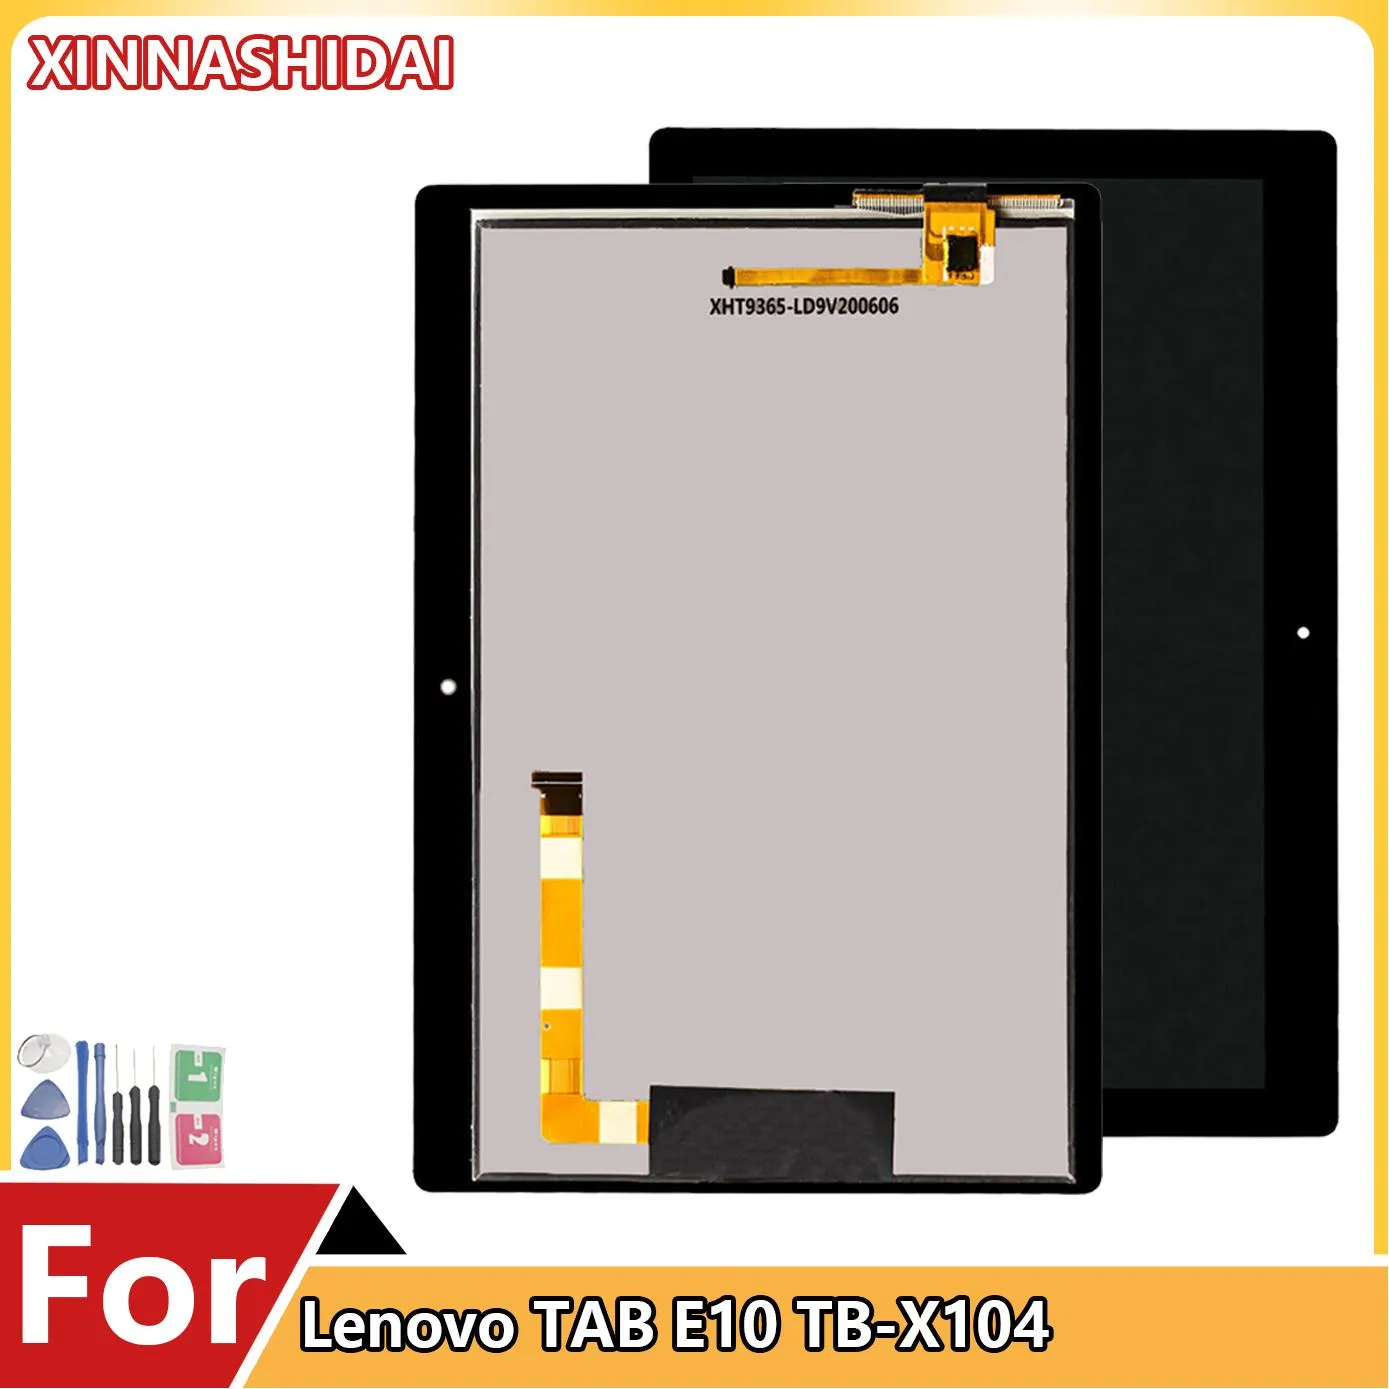 Pannelli 10.1 '' per la scheda Lenovo E10 TBX104 TBX104F TBX104L TB X104 LCD Display Screen Glass Glass Gasserzer Parti di sostituzione